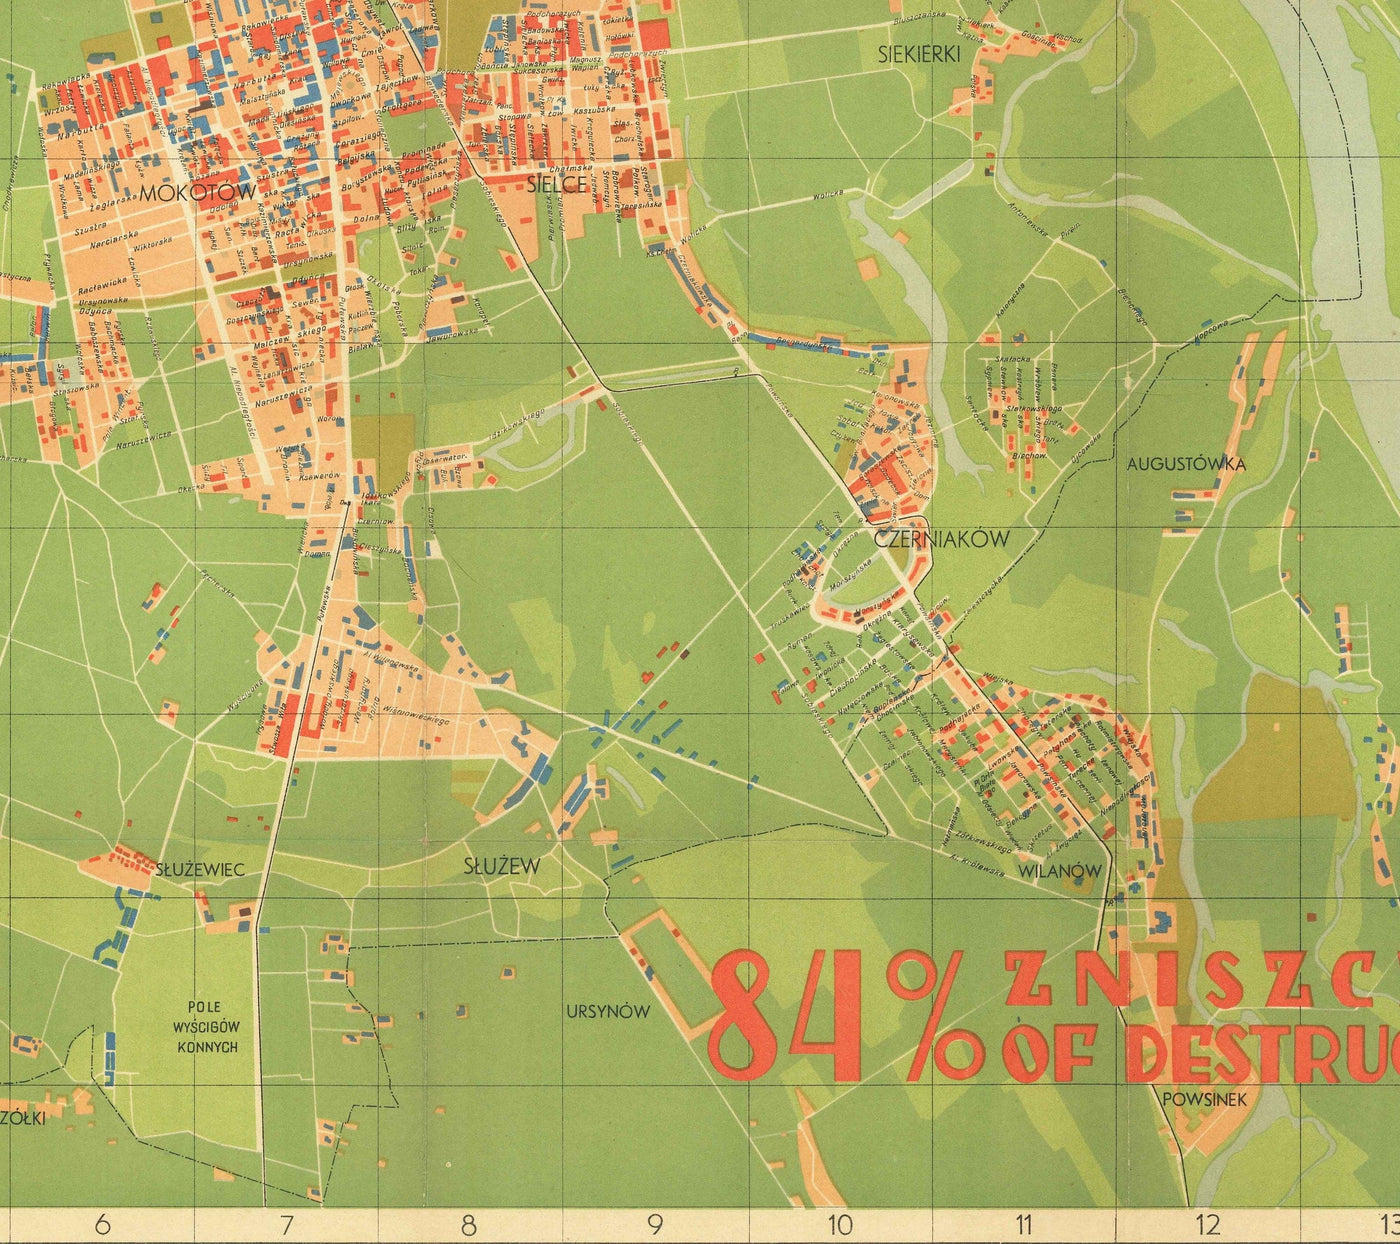 Old Map of the Nazi Destruction of Varsovie, 1949 - Cente censuré Soviétique WW2 - Old Town, Ghetto, Muranow, Praga